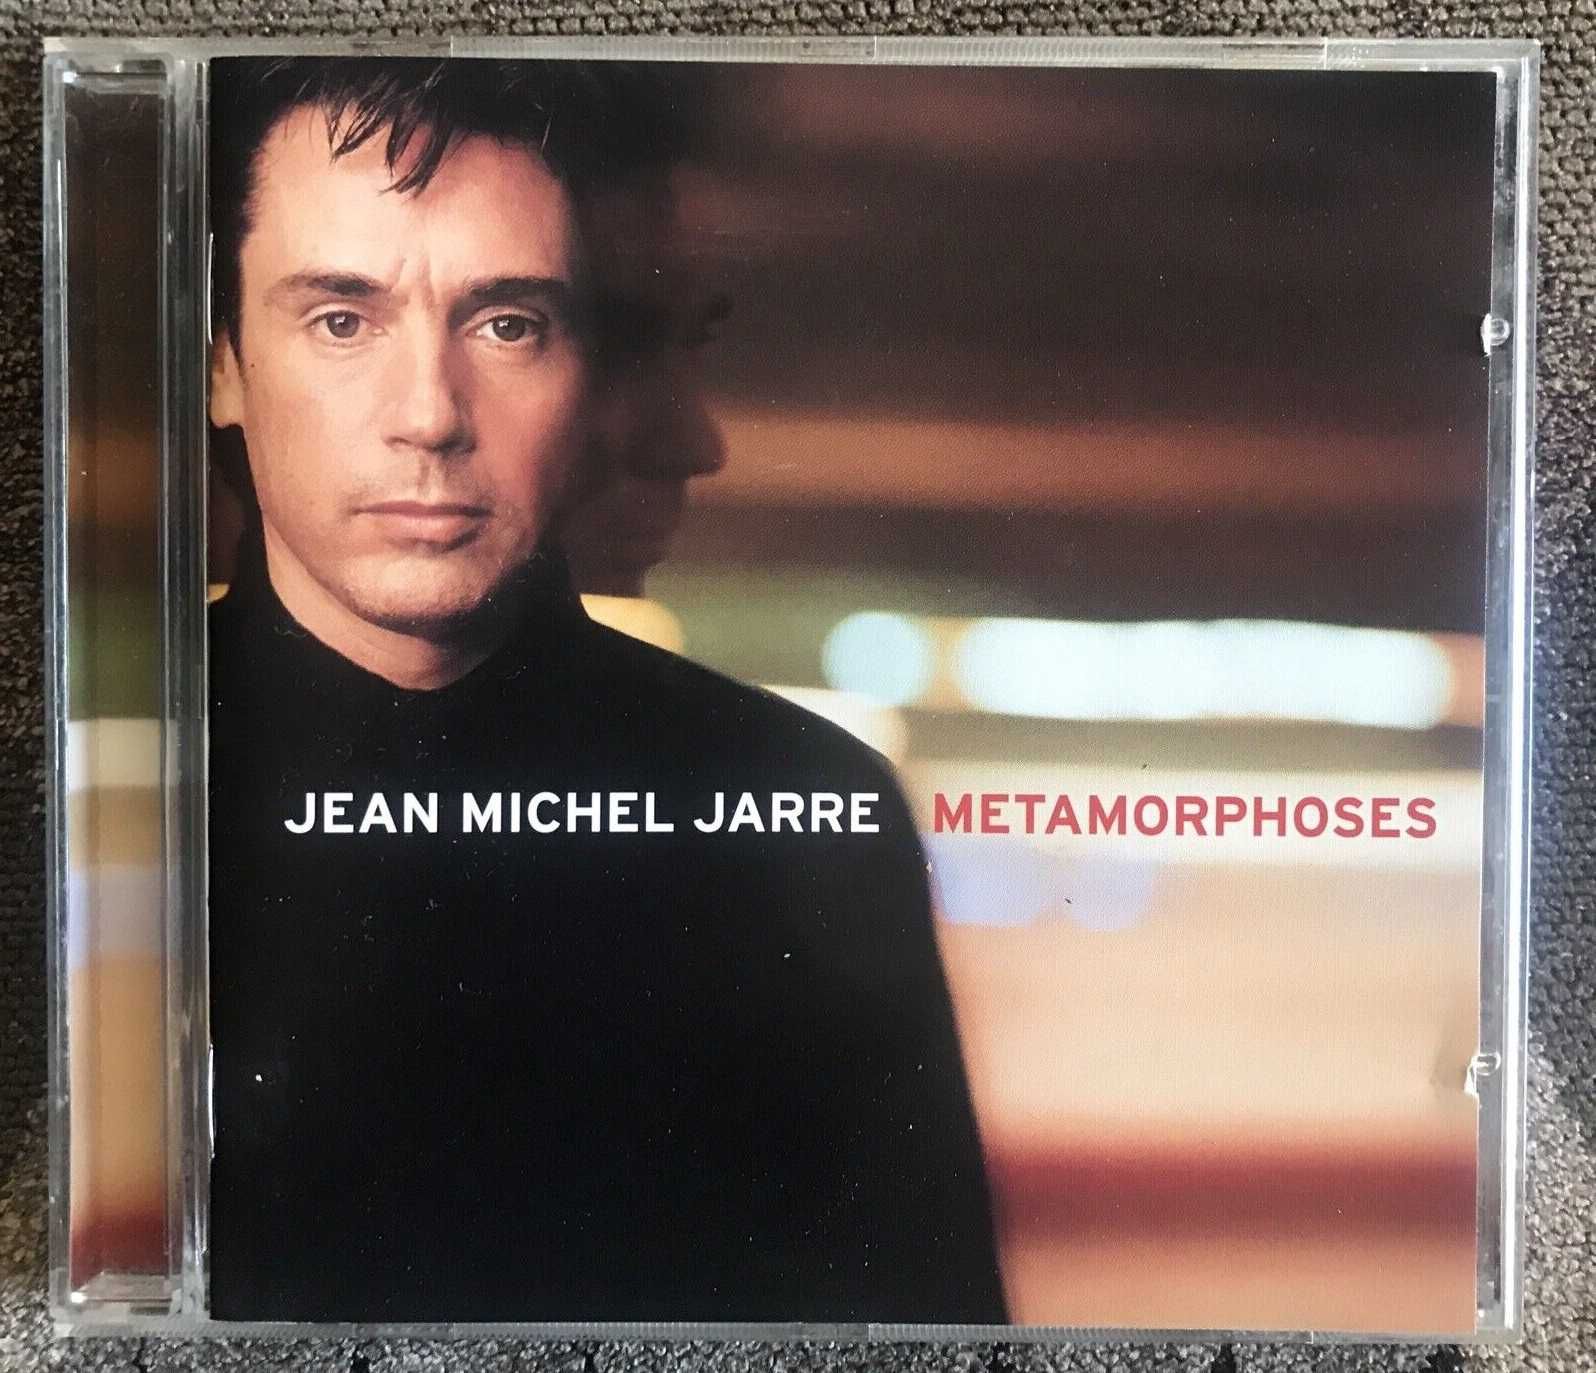 Jean Michel Jarre "Metamorphoses" CD